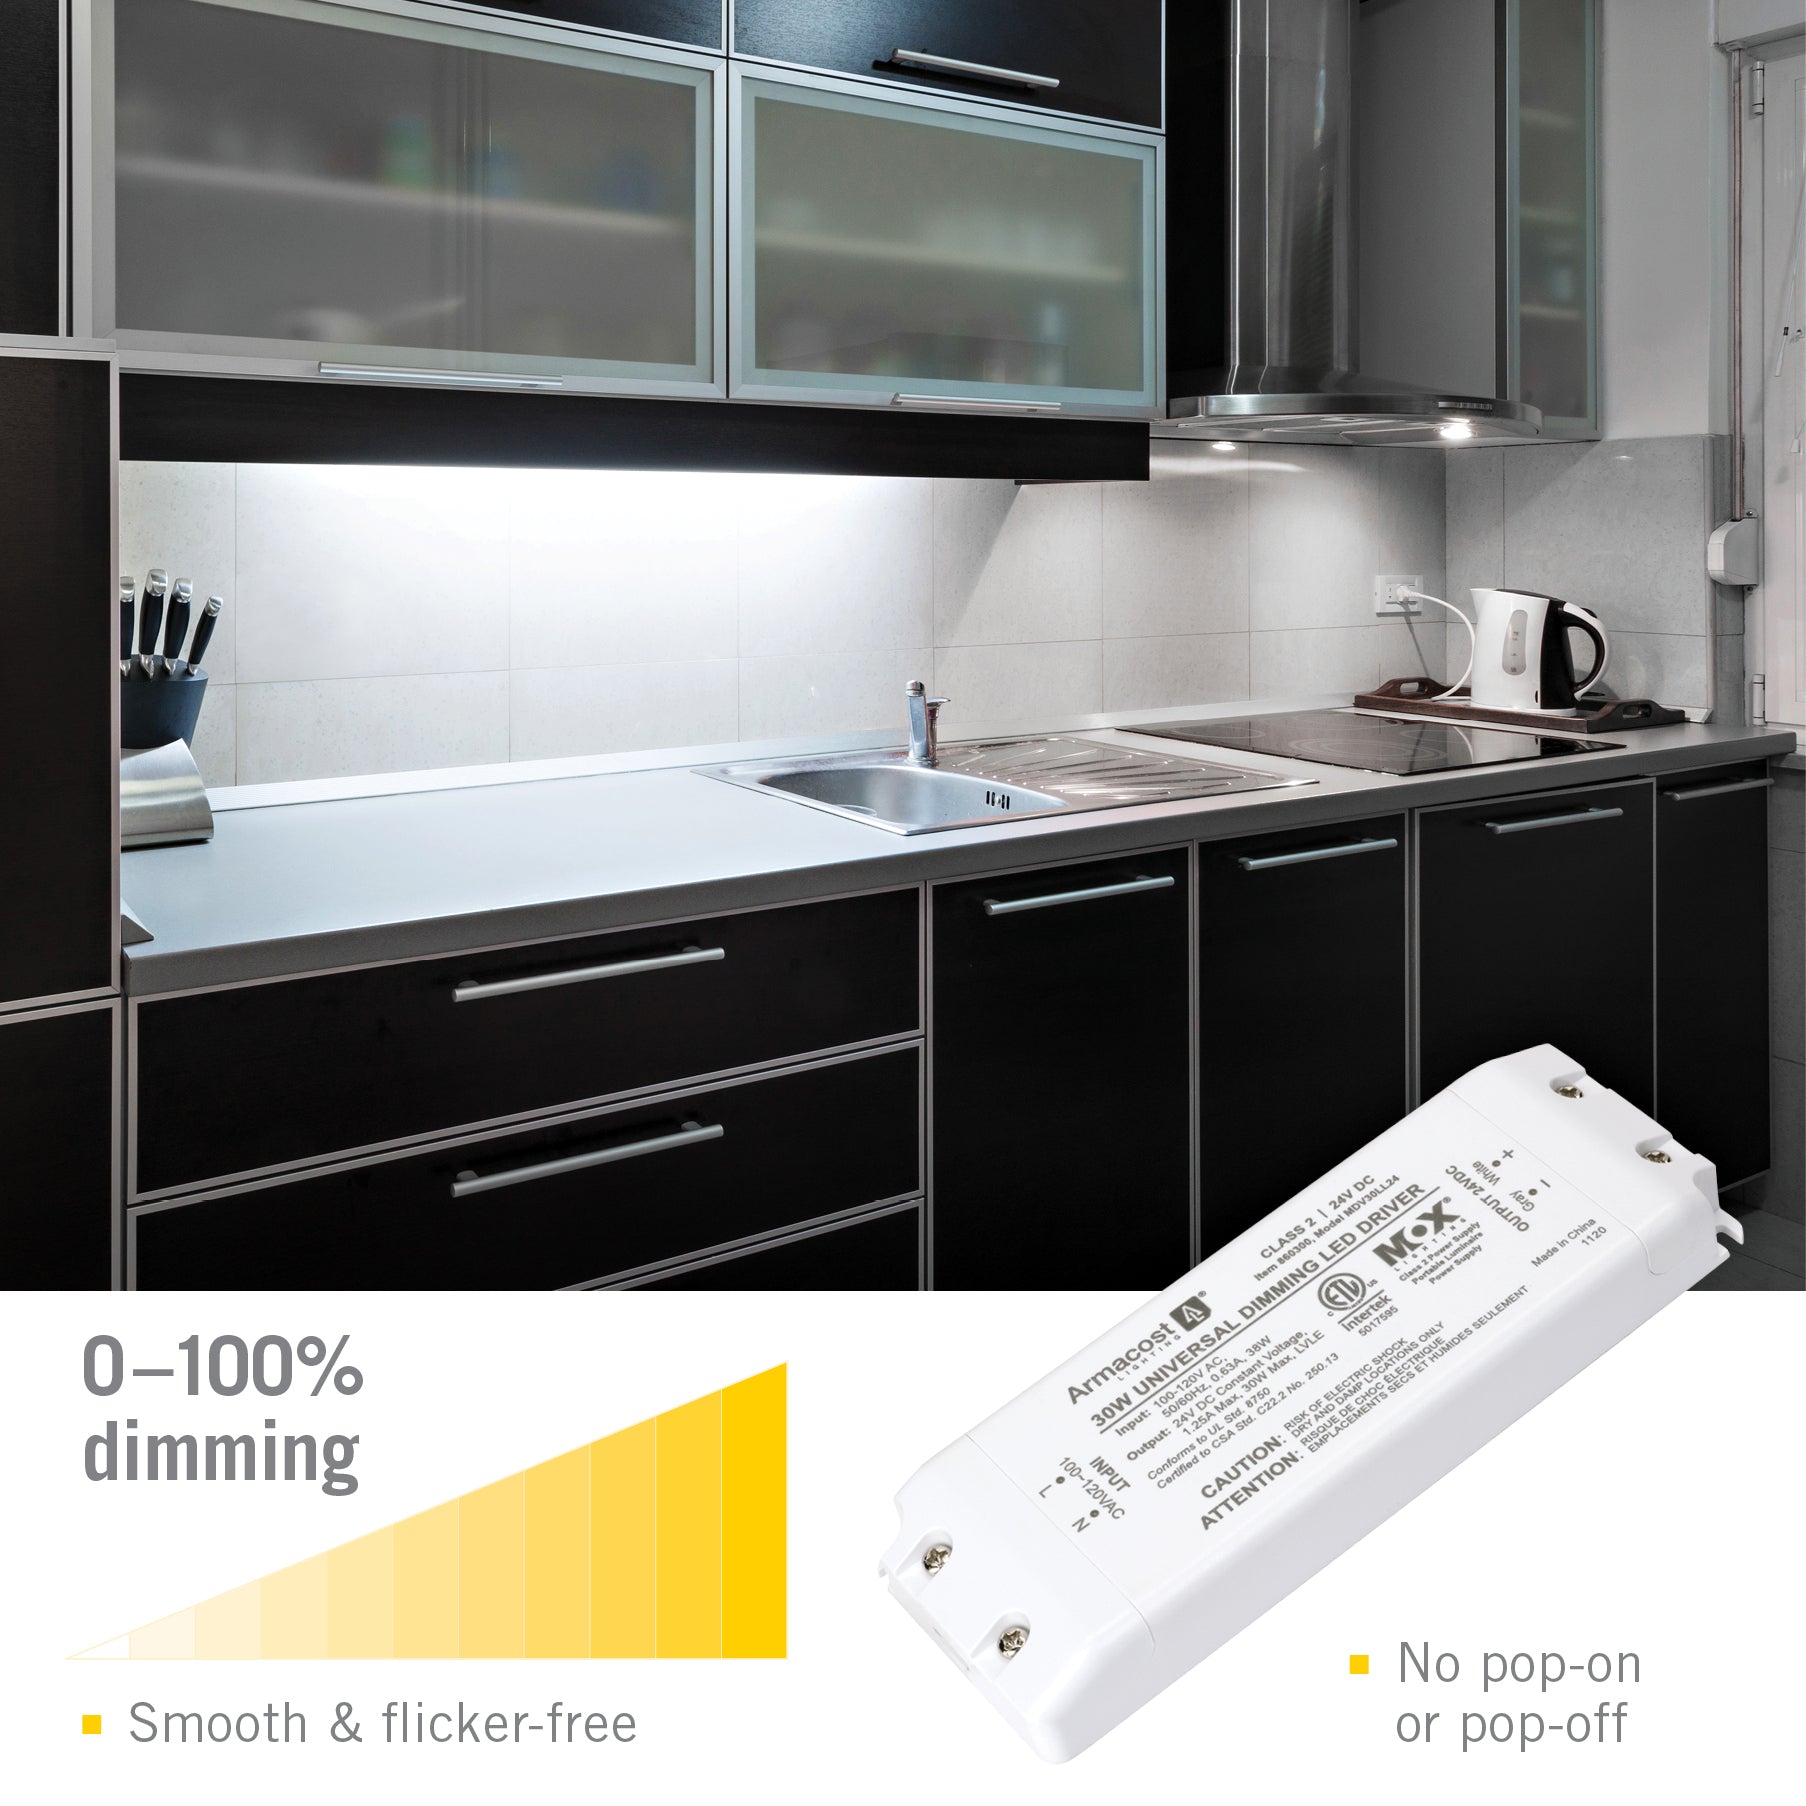 4x Cadix - Mini spot encastrable LED 12V blanc avec transformateur - 3 Watt  - Dimmable